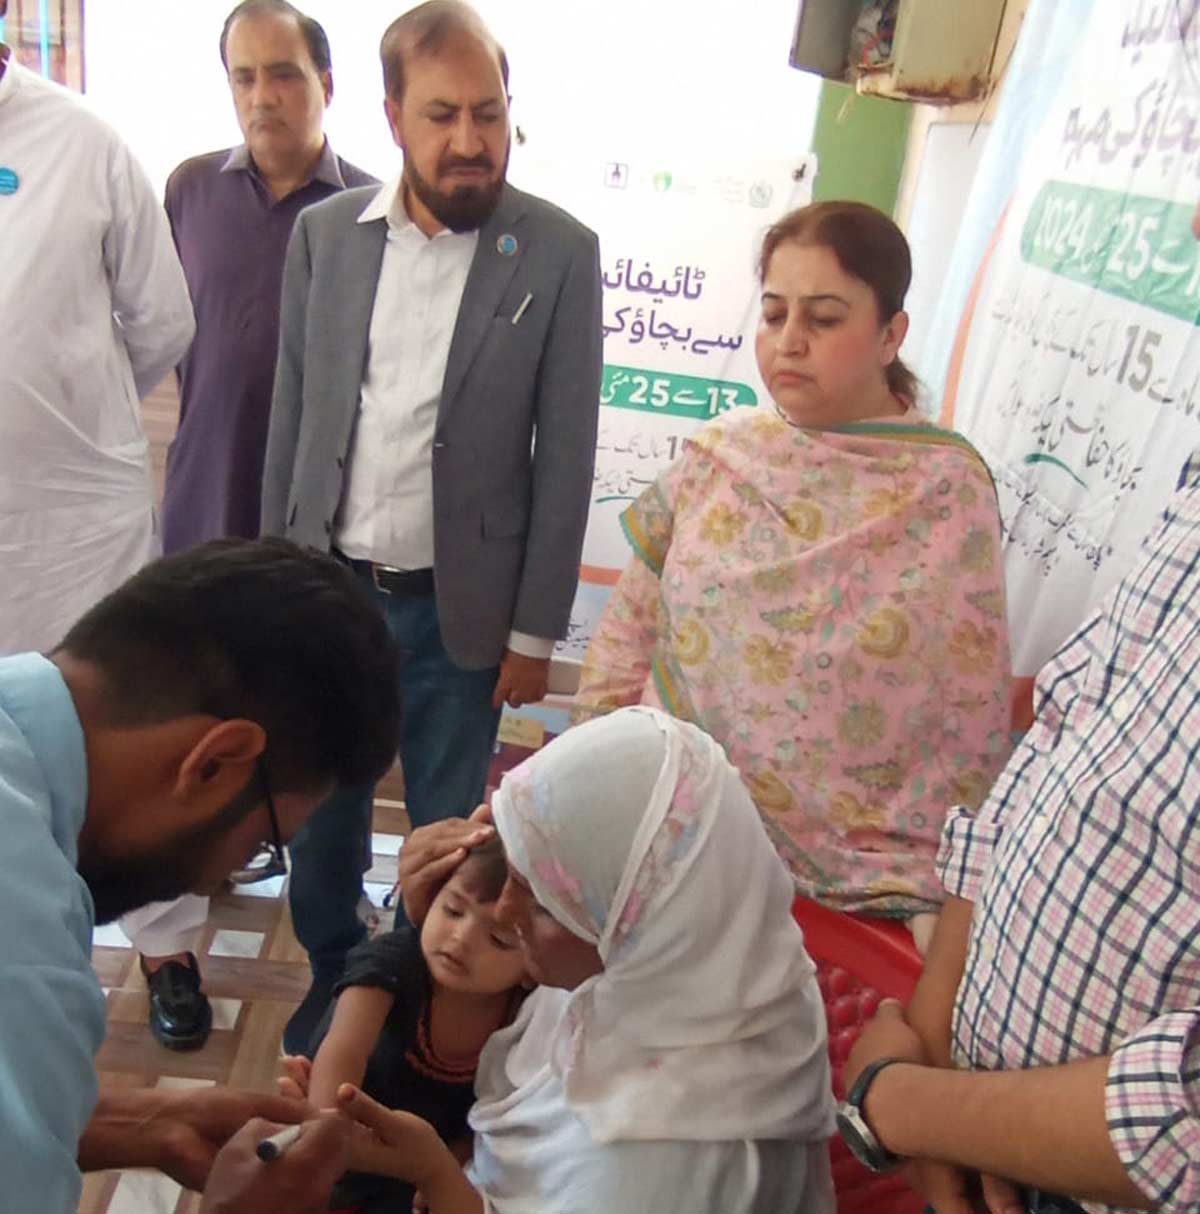 Sindh Health Department inaugurating the emergency typhoid vaccine campaign in Karachi. Credit: Rahul Bashara